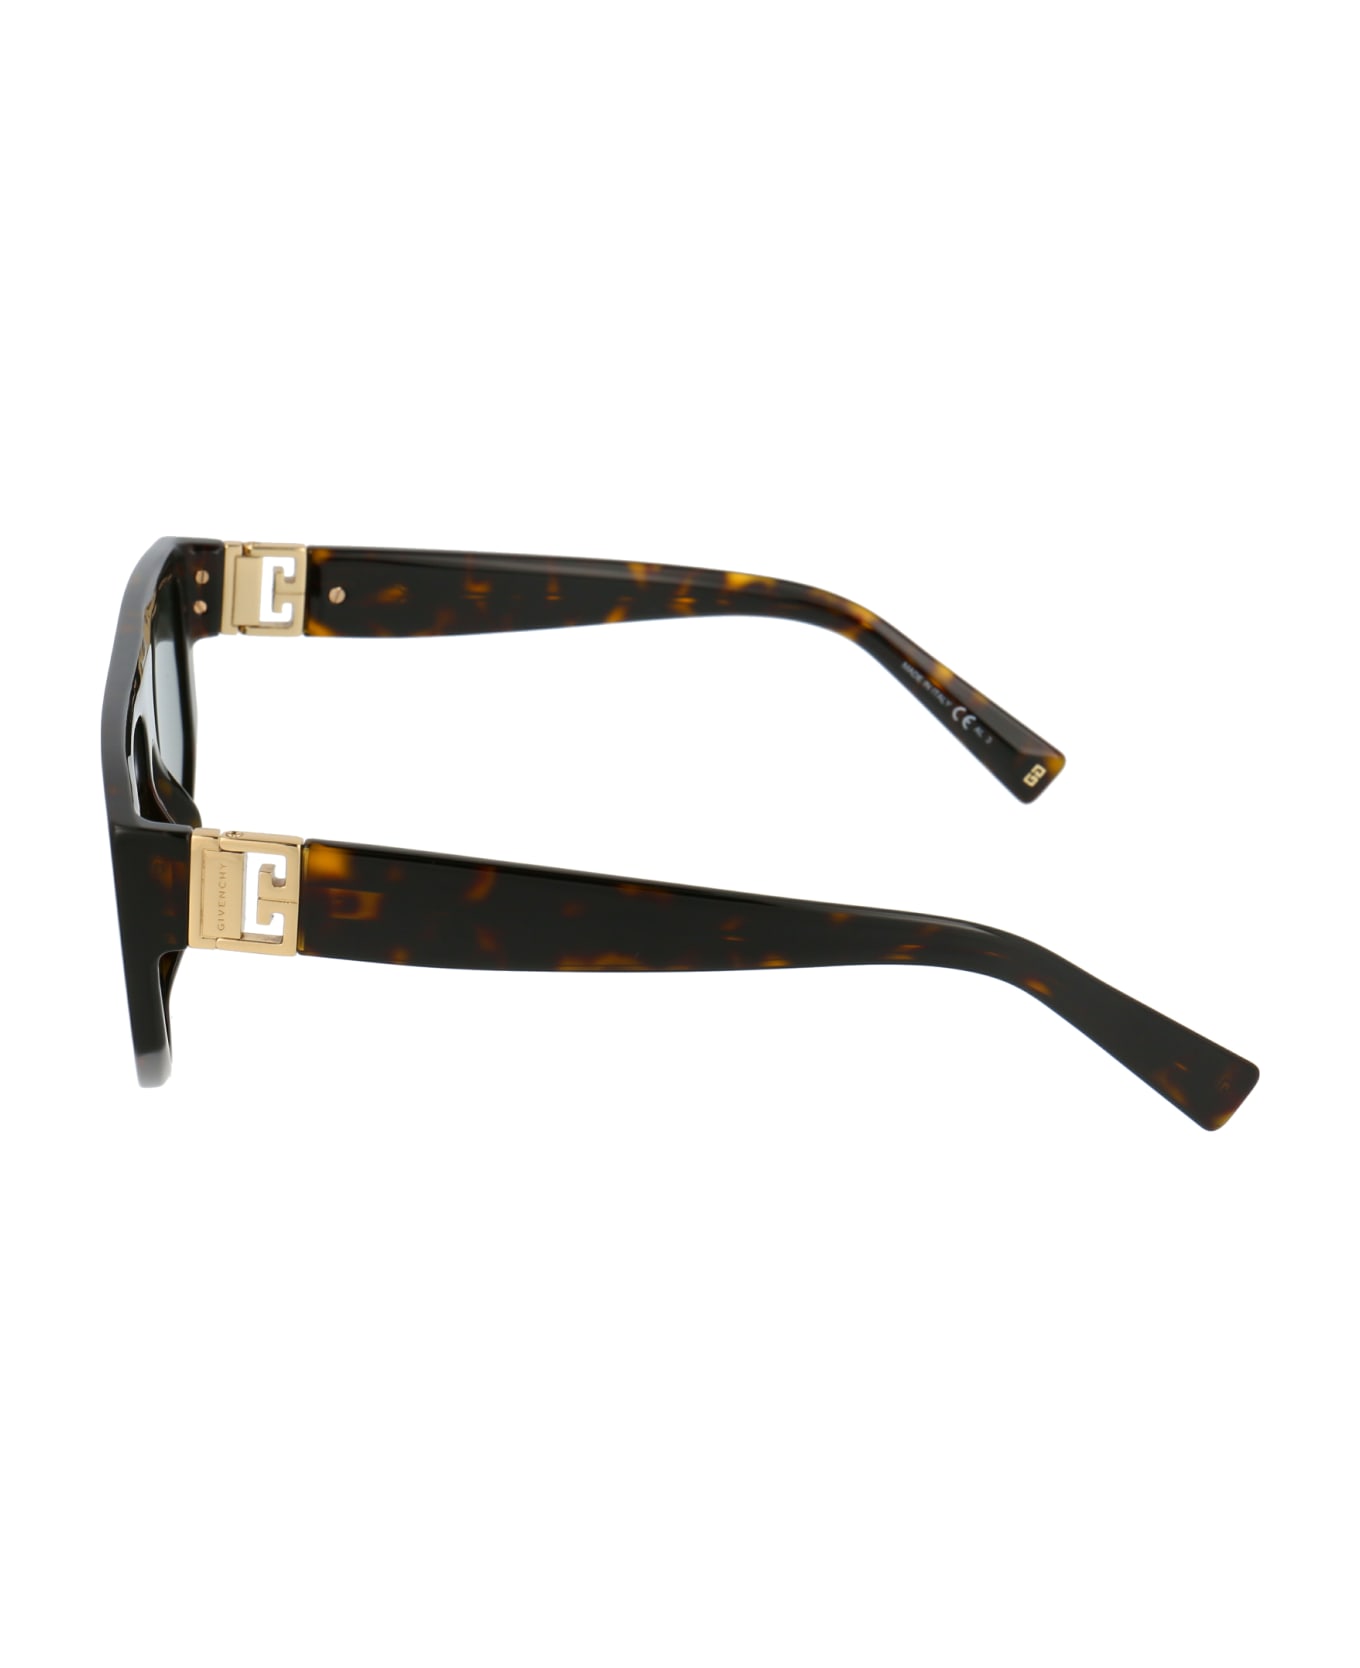 Givenchy Eyewear Gv 7156/s Sunglasses - 086QT HVN